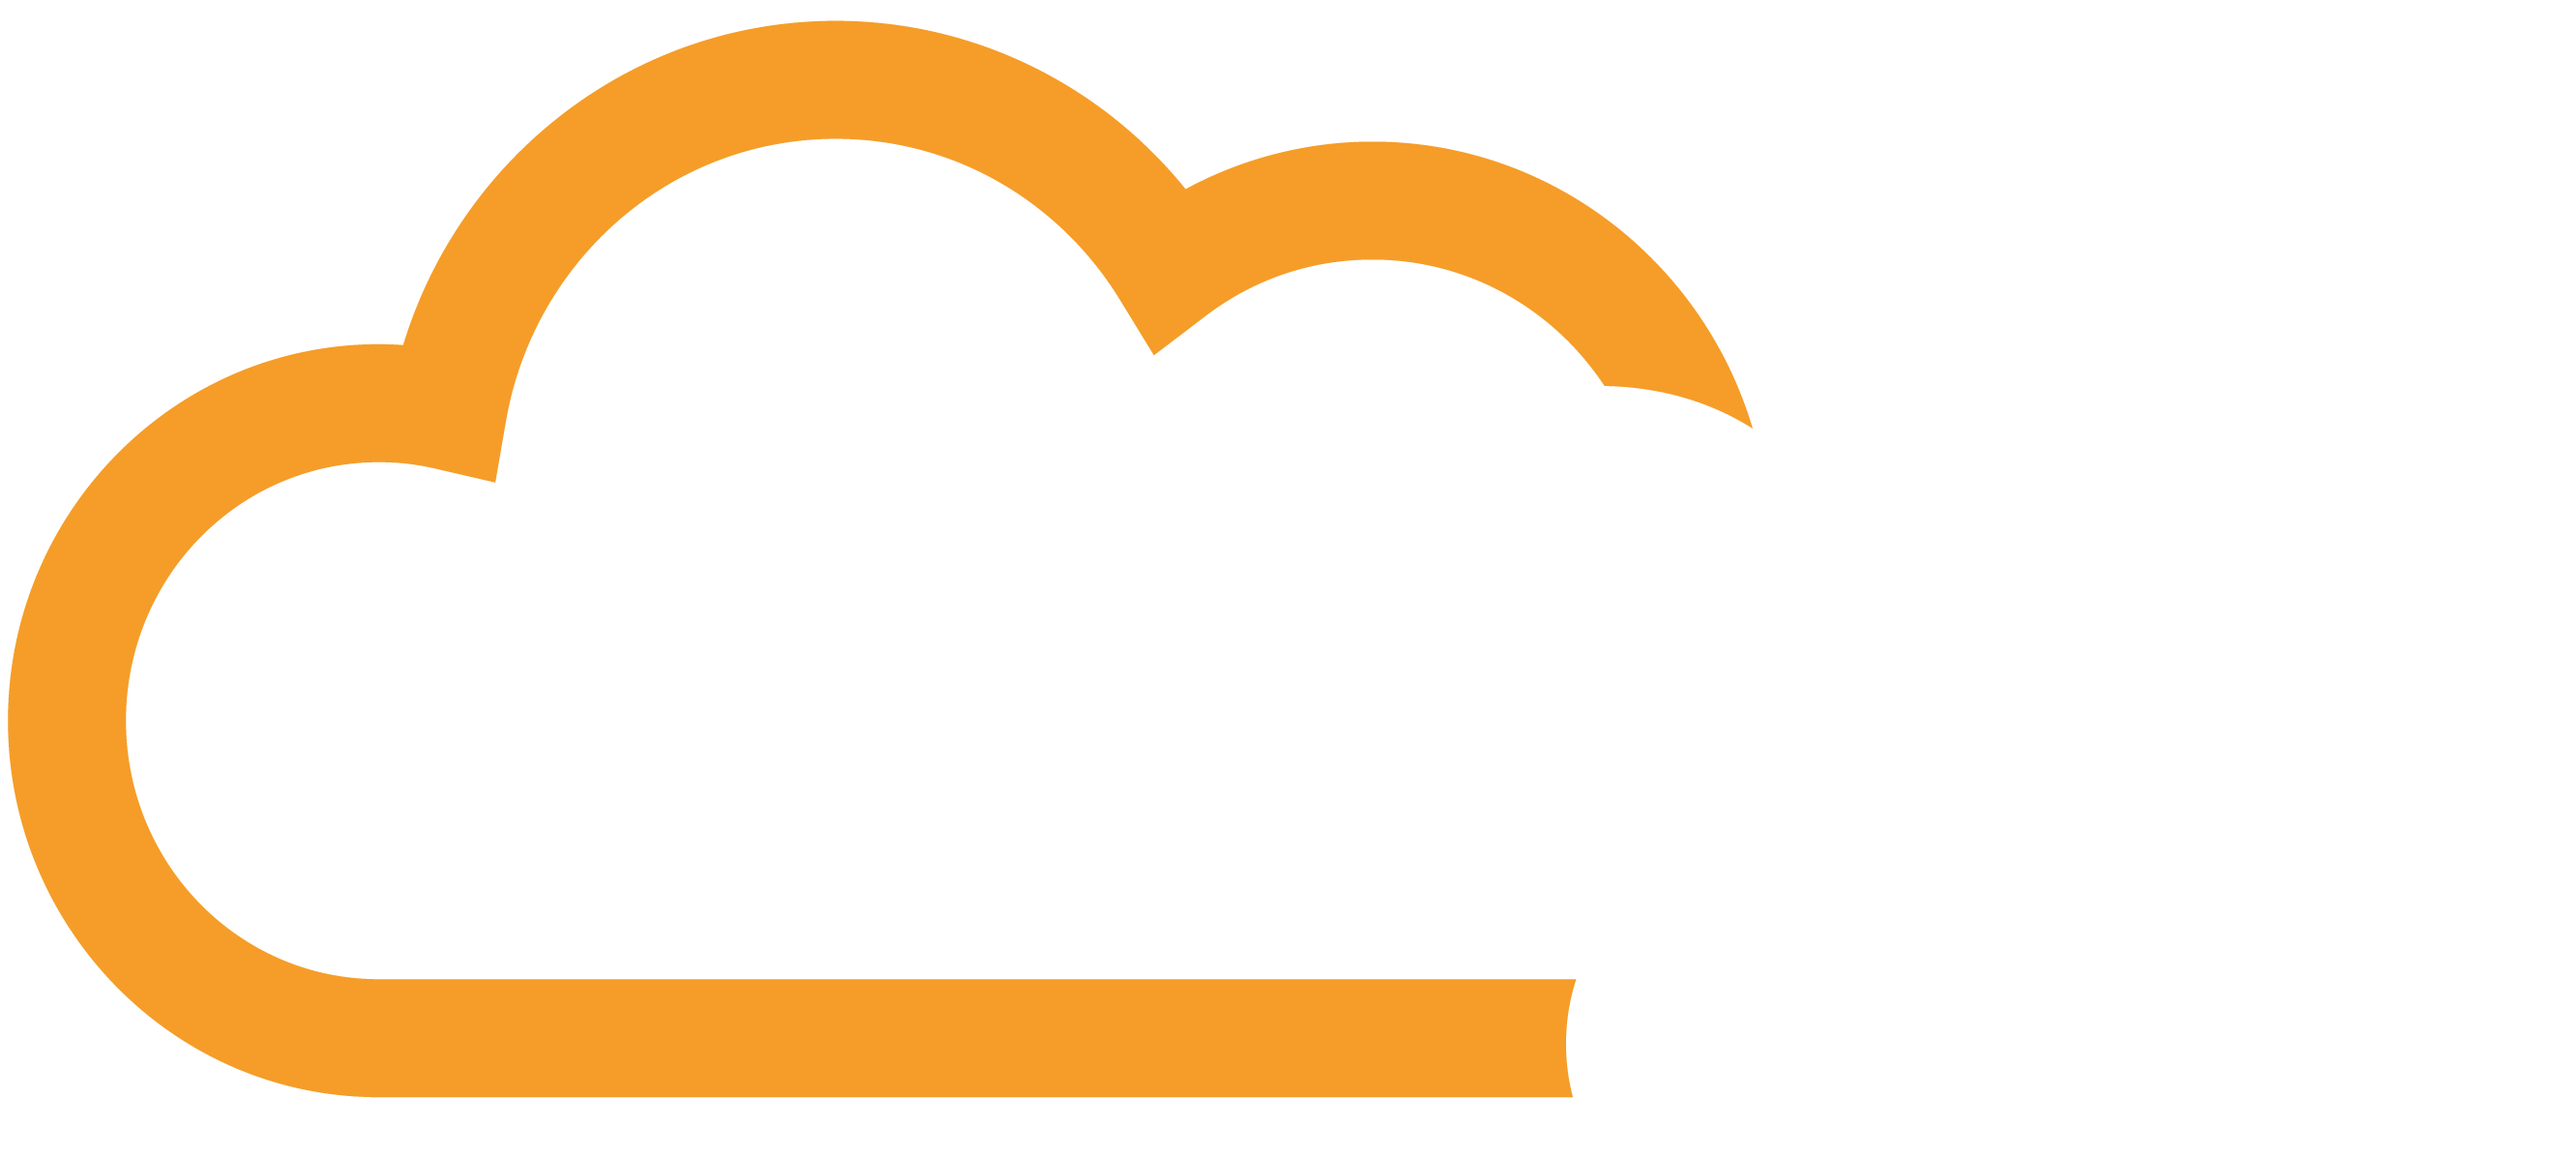 Focus Careers